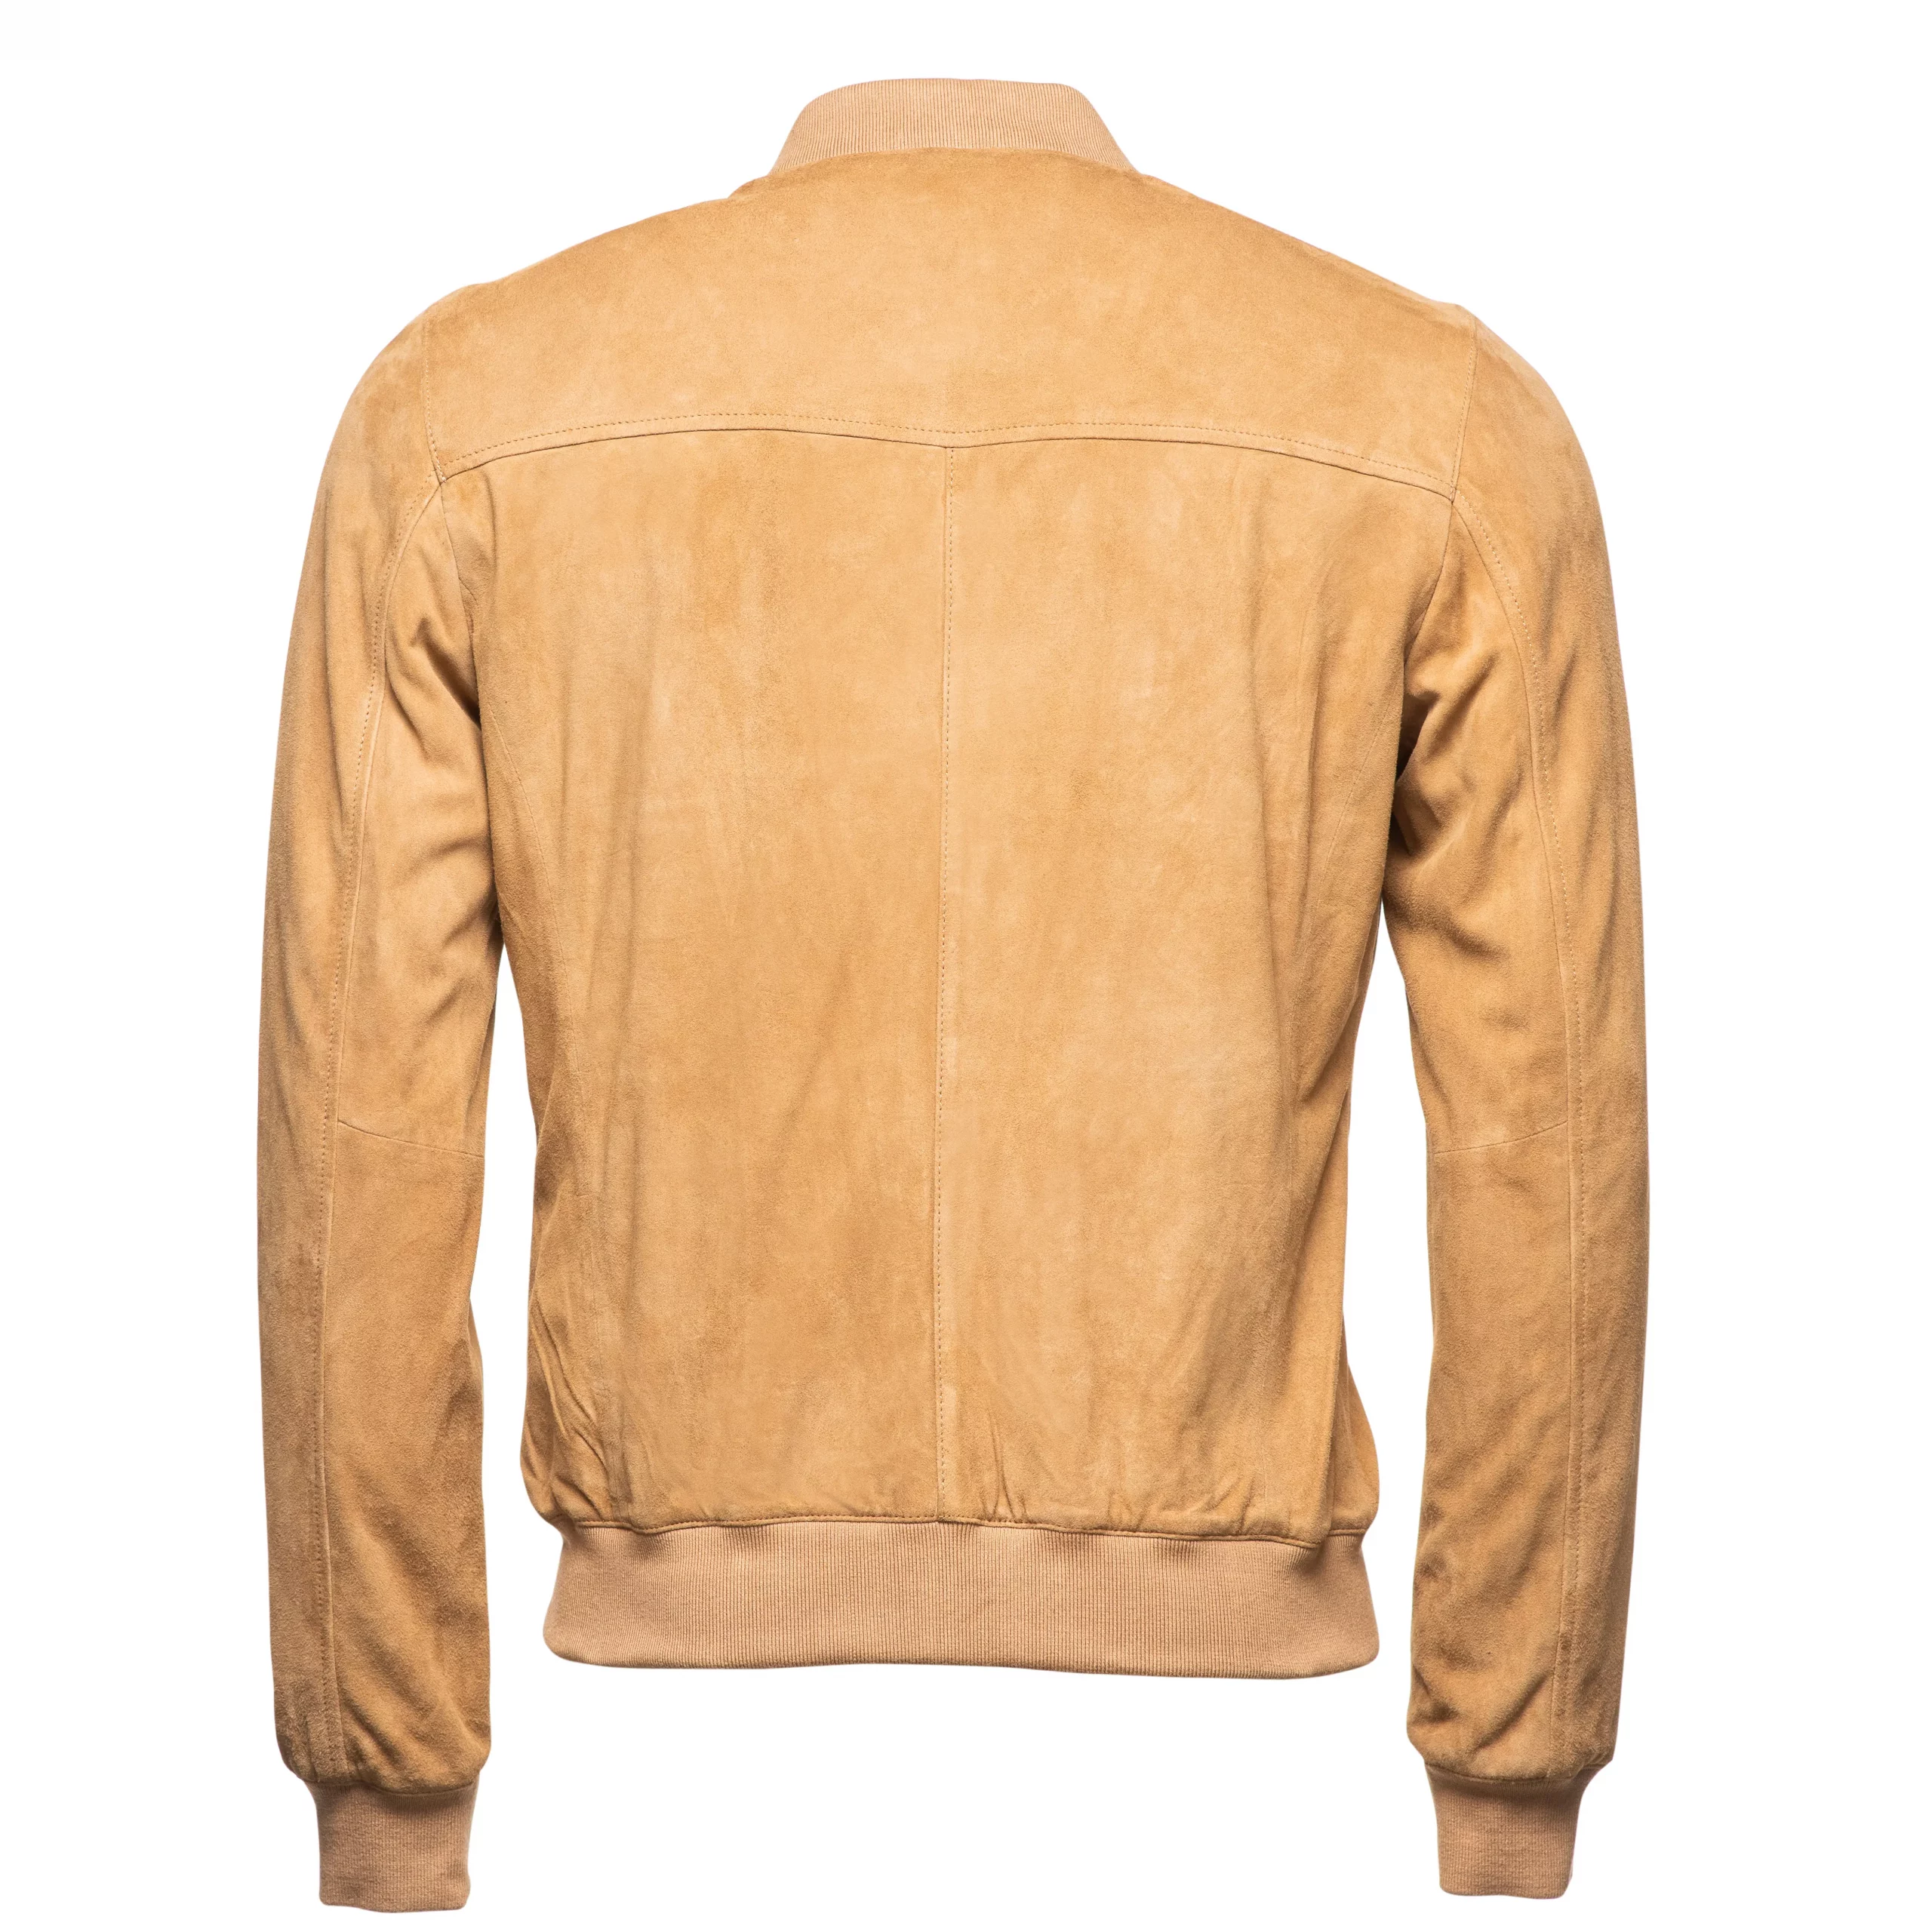 Robrique Leather Jacket 2 Scaled 1